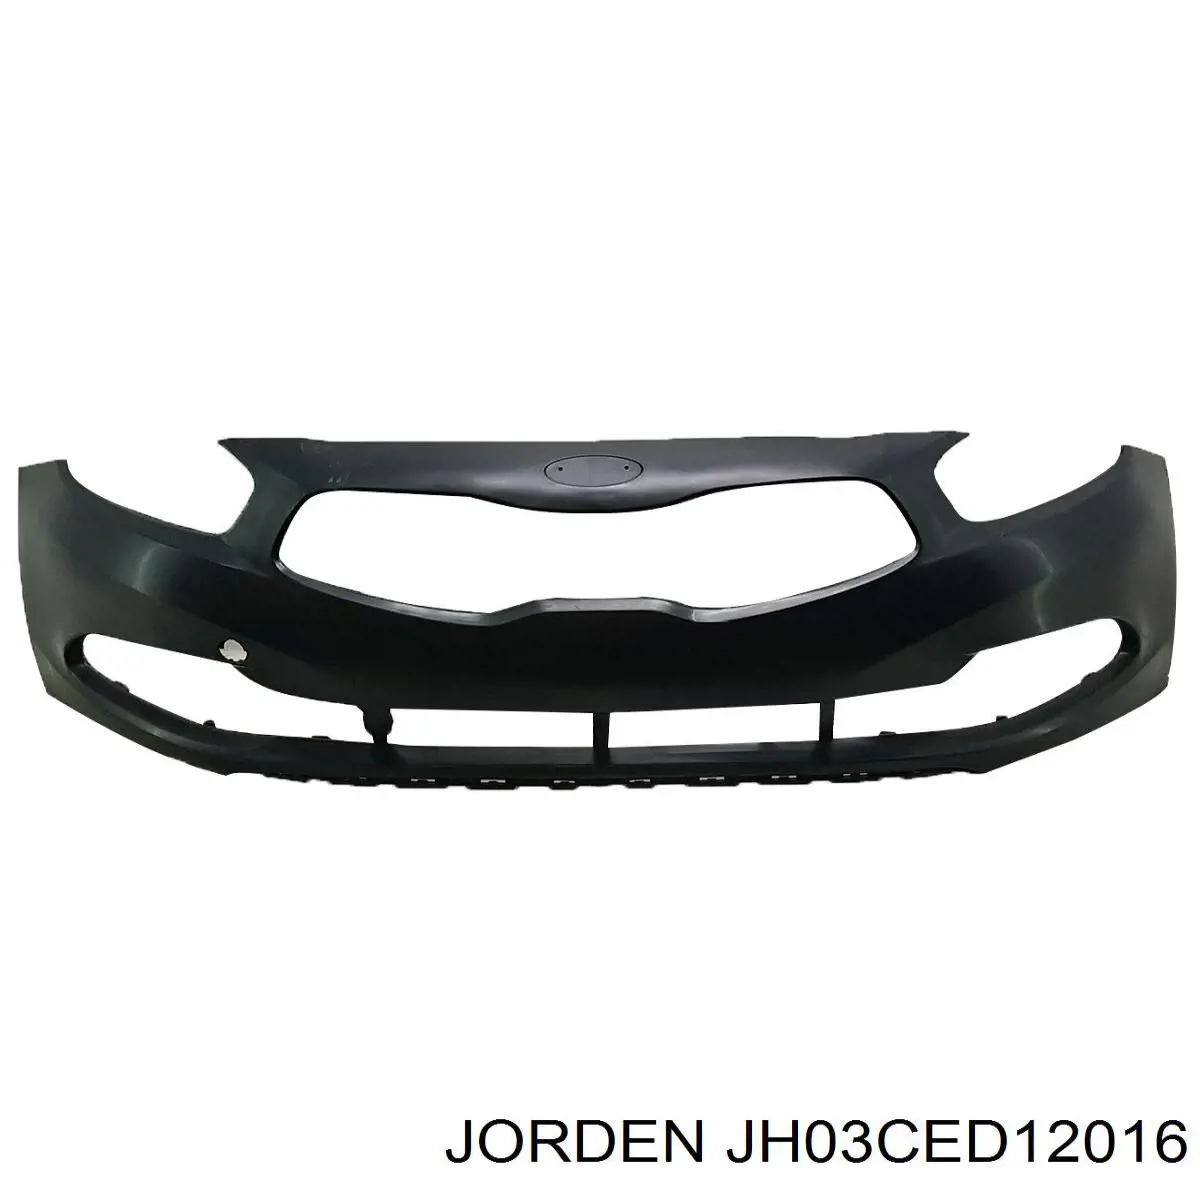 JH03CED12016 Jorden передний бампер